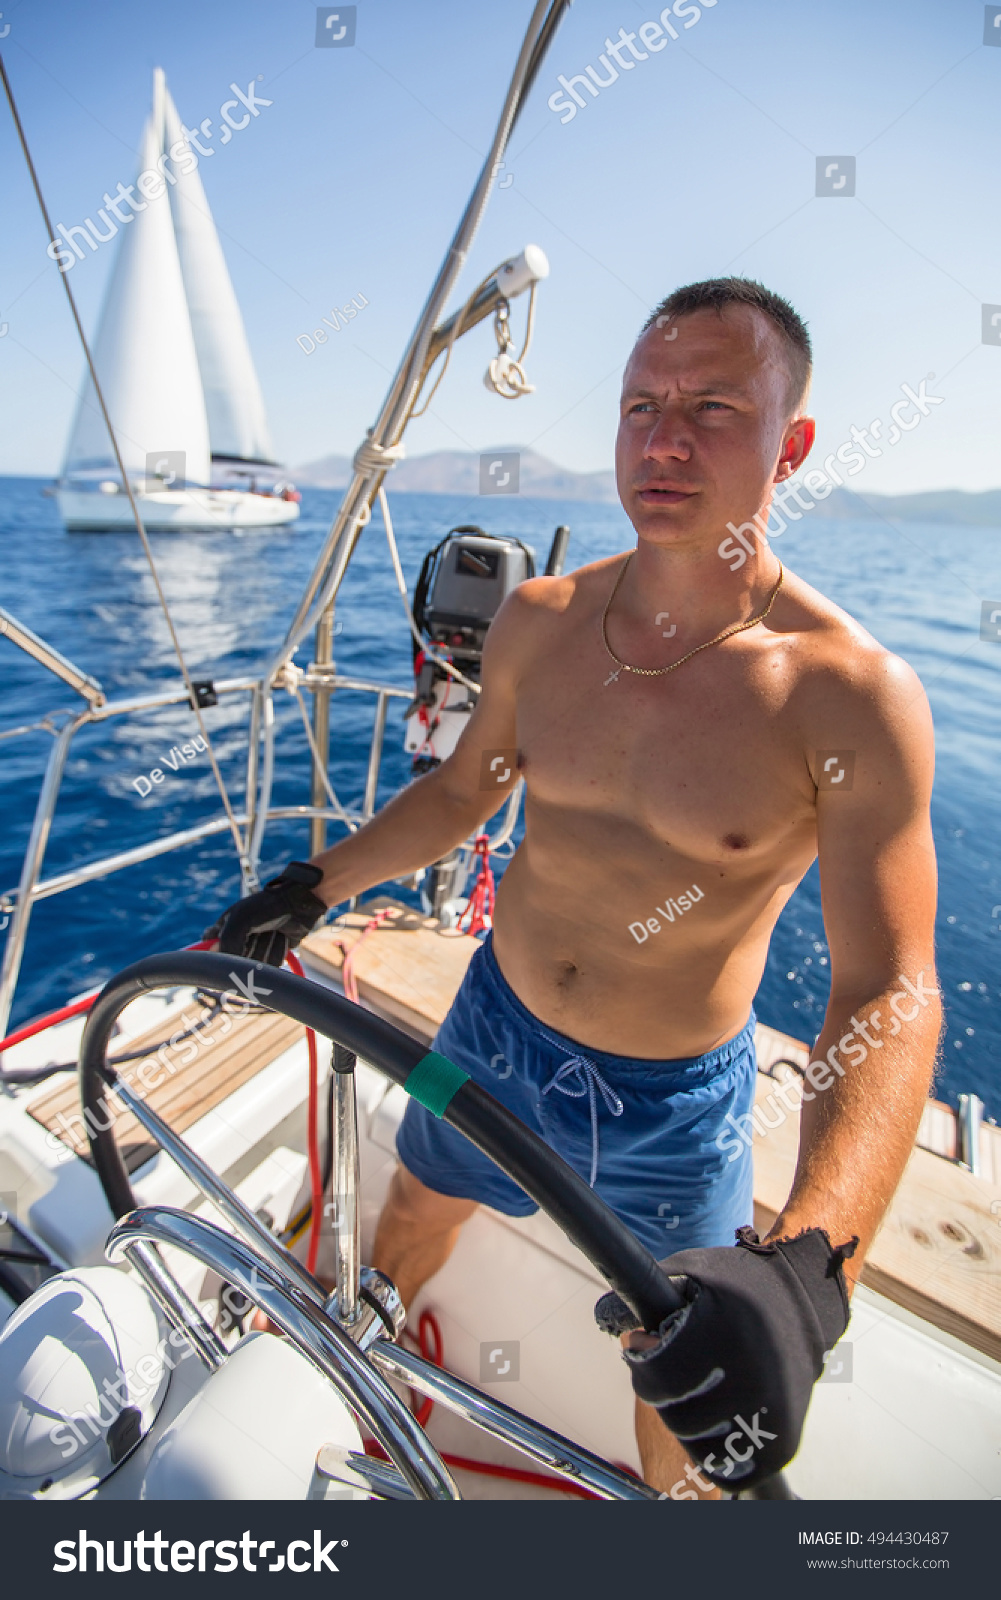 image yachtsman